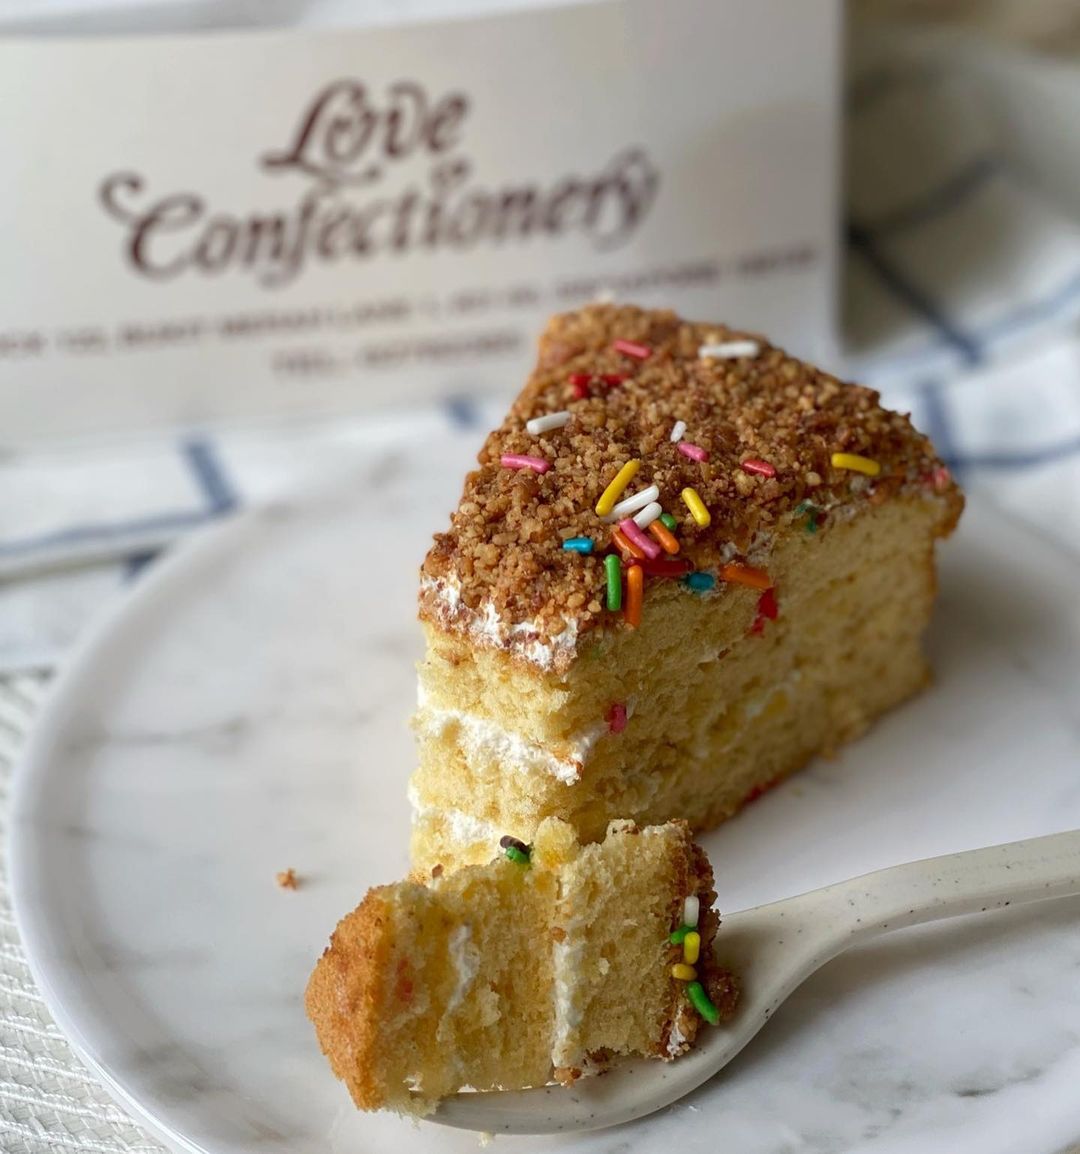 love confectionery - peanut cake